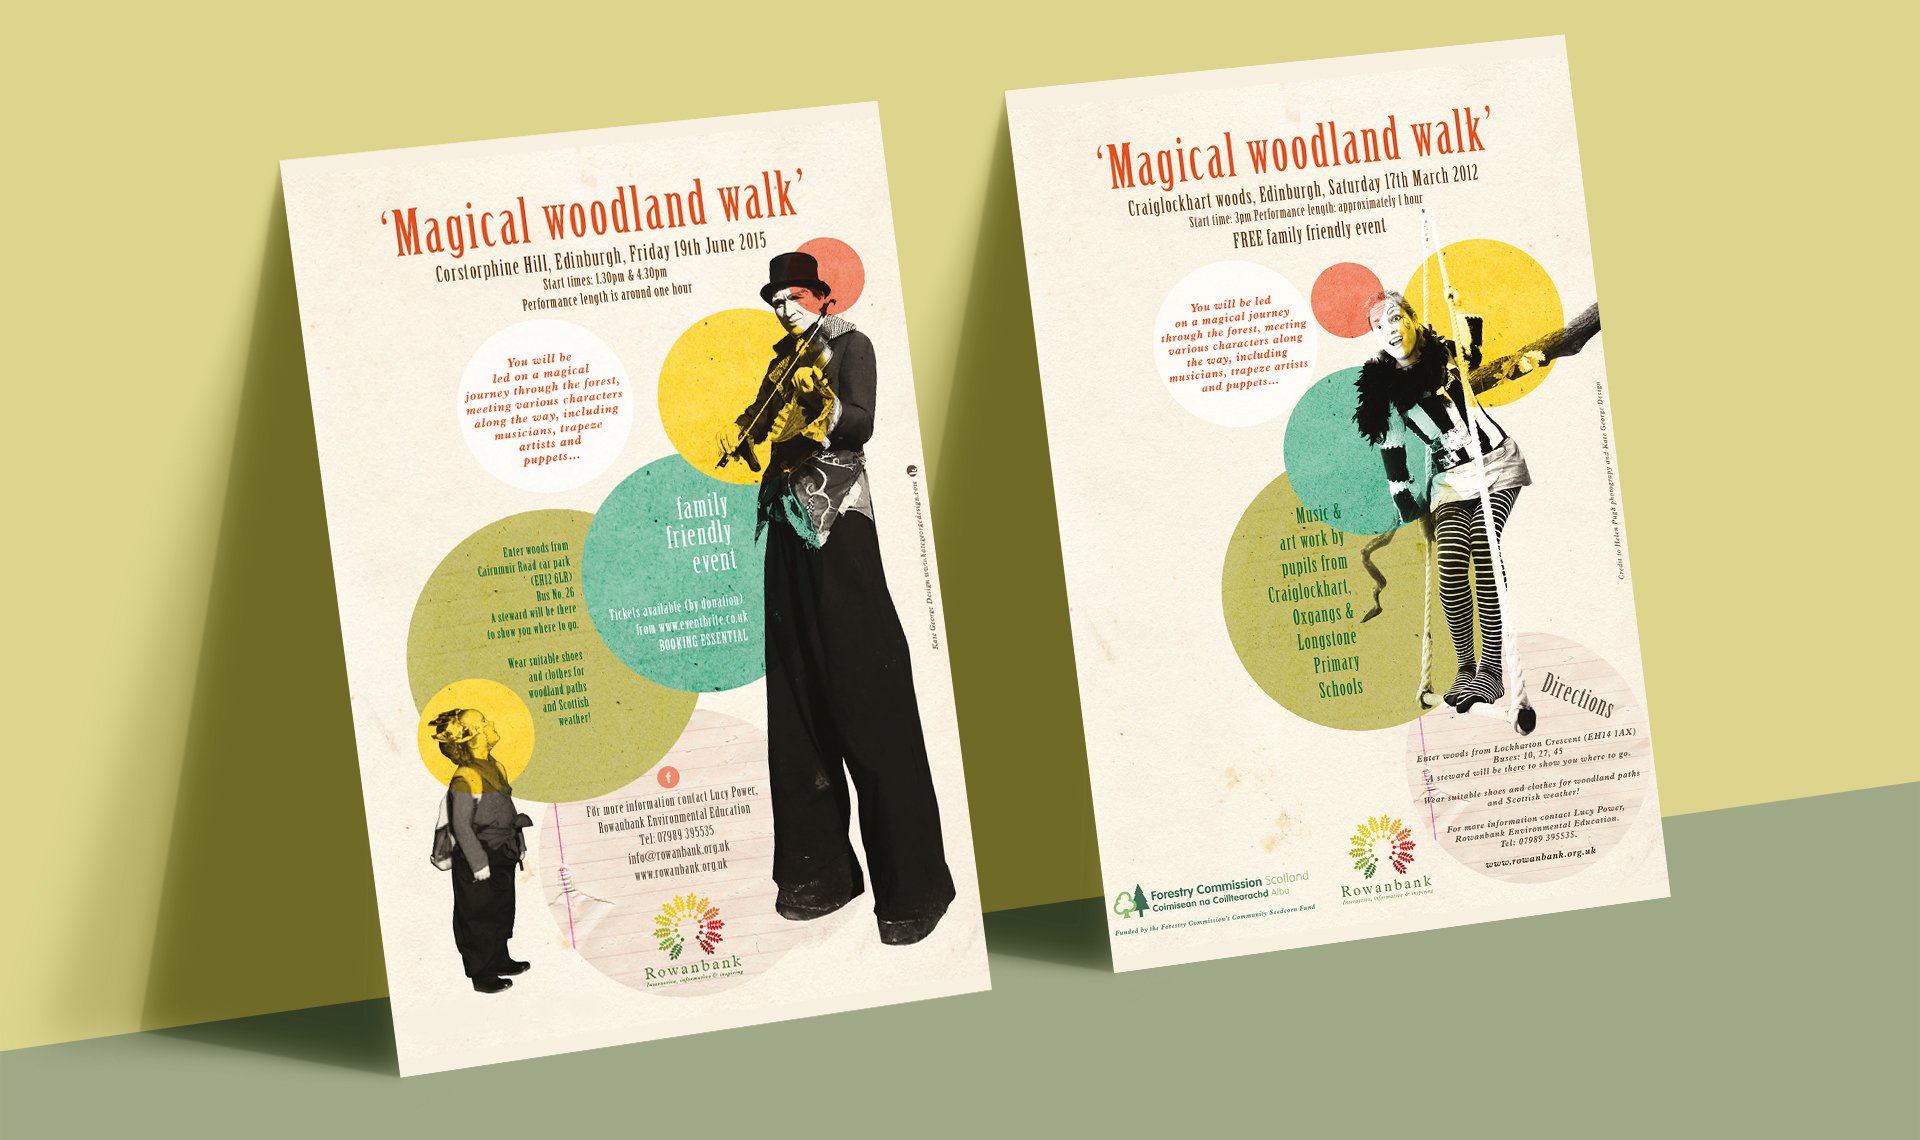 Rowanbank Environmental Arts flyers for Magical Woodland walks